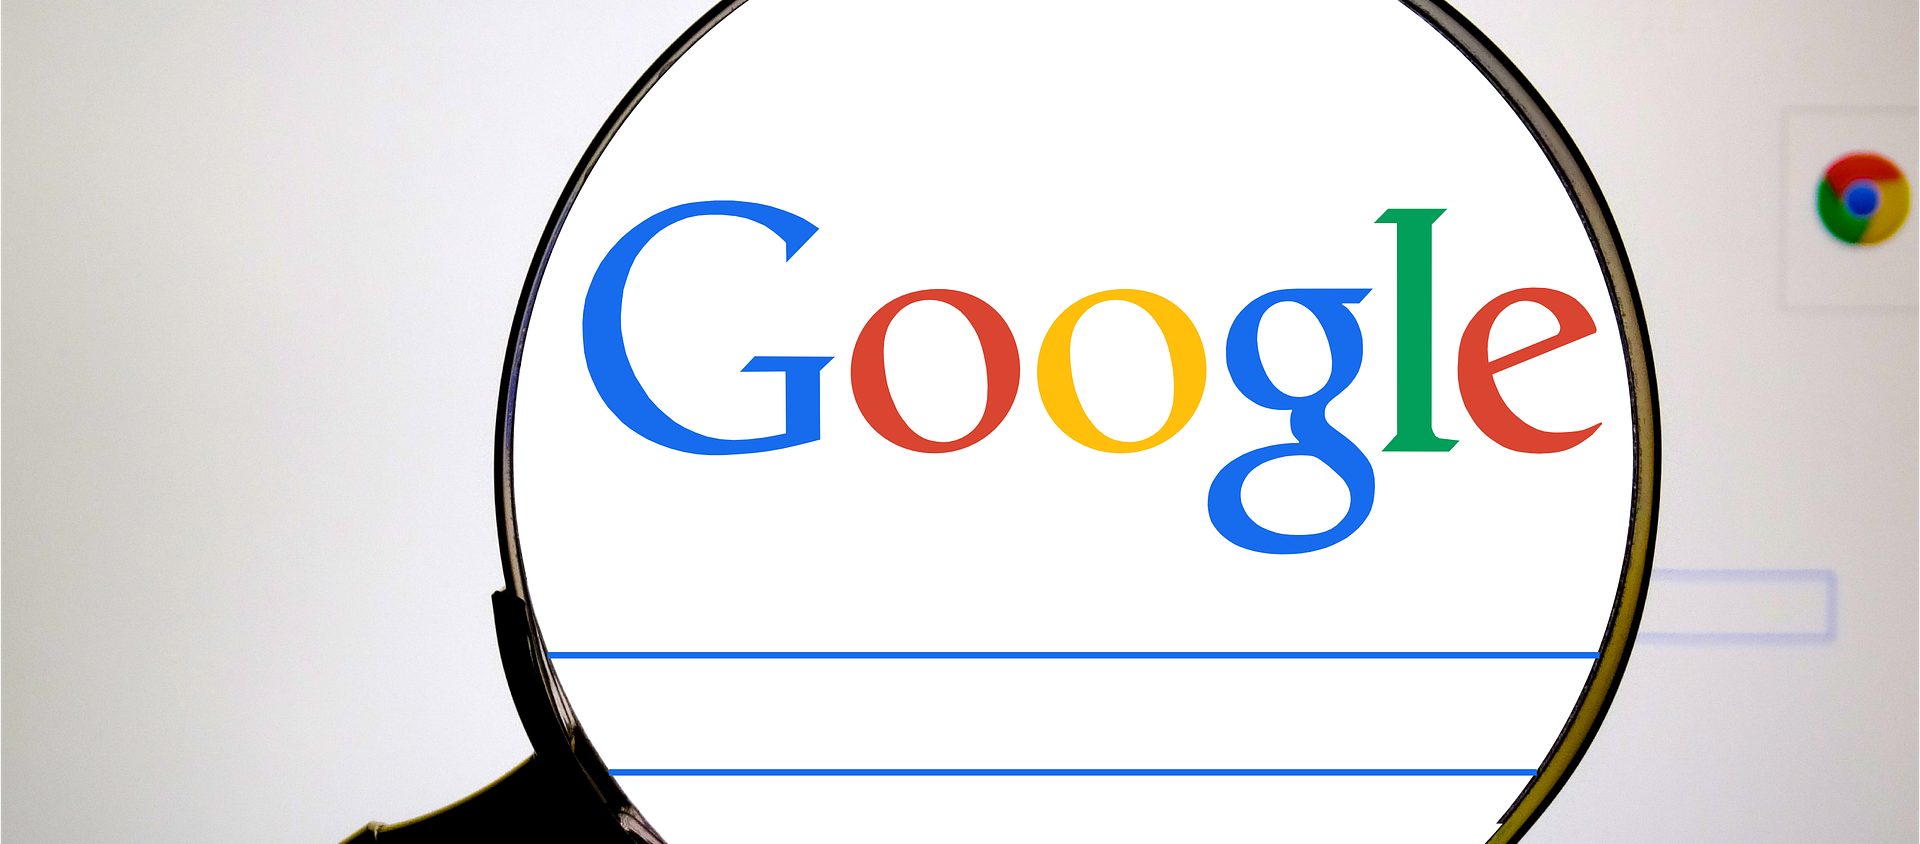 Логотип компании Google, архивное фото  - Sputnik Тоҷикистон, 1920, 13.01.2021